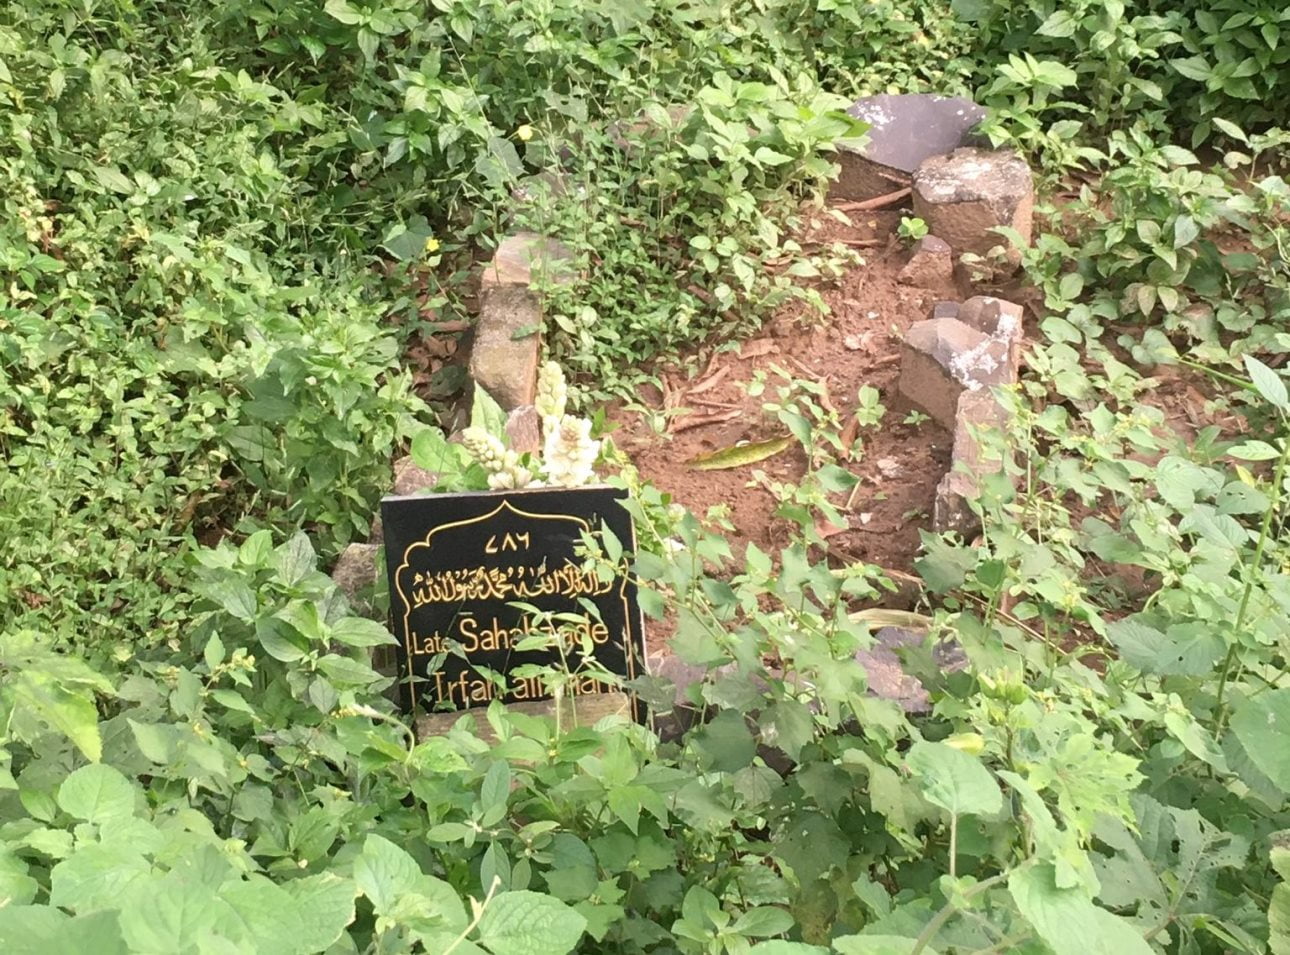 Late Irrfan Khan's resting place